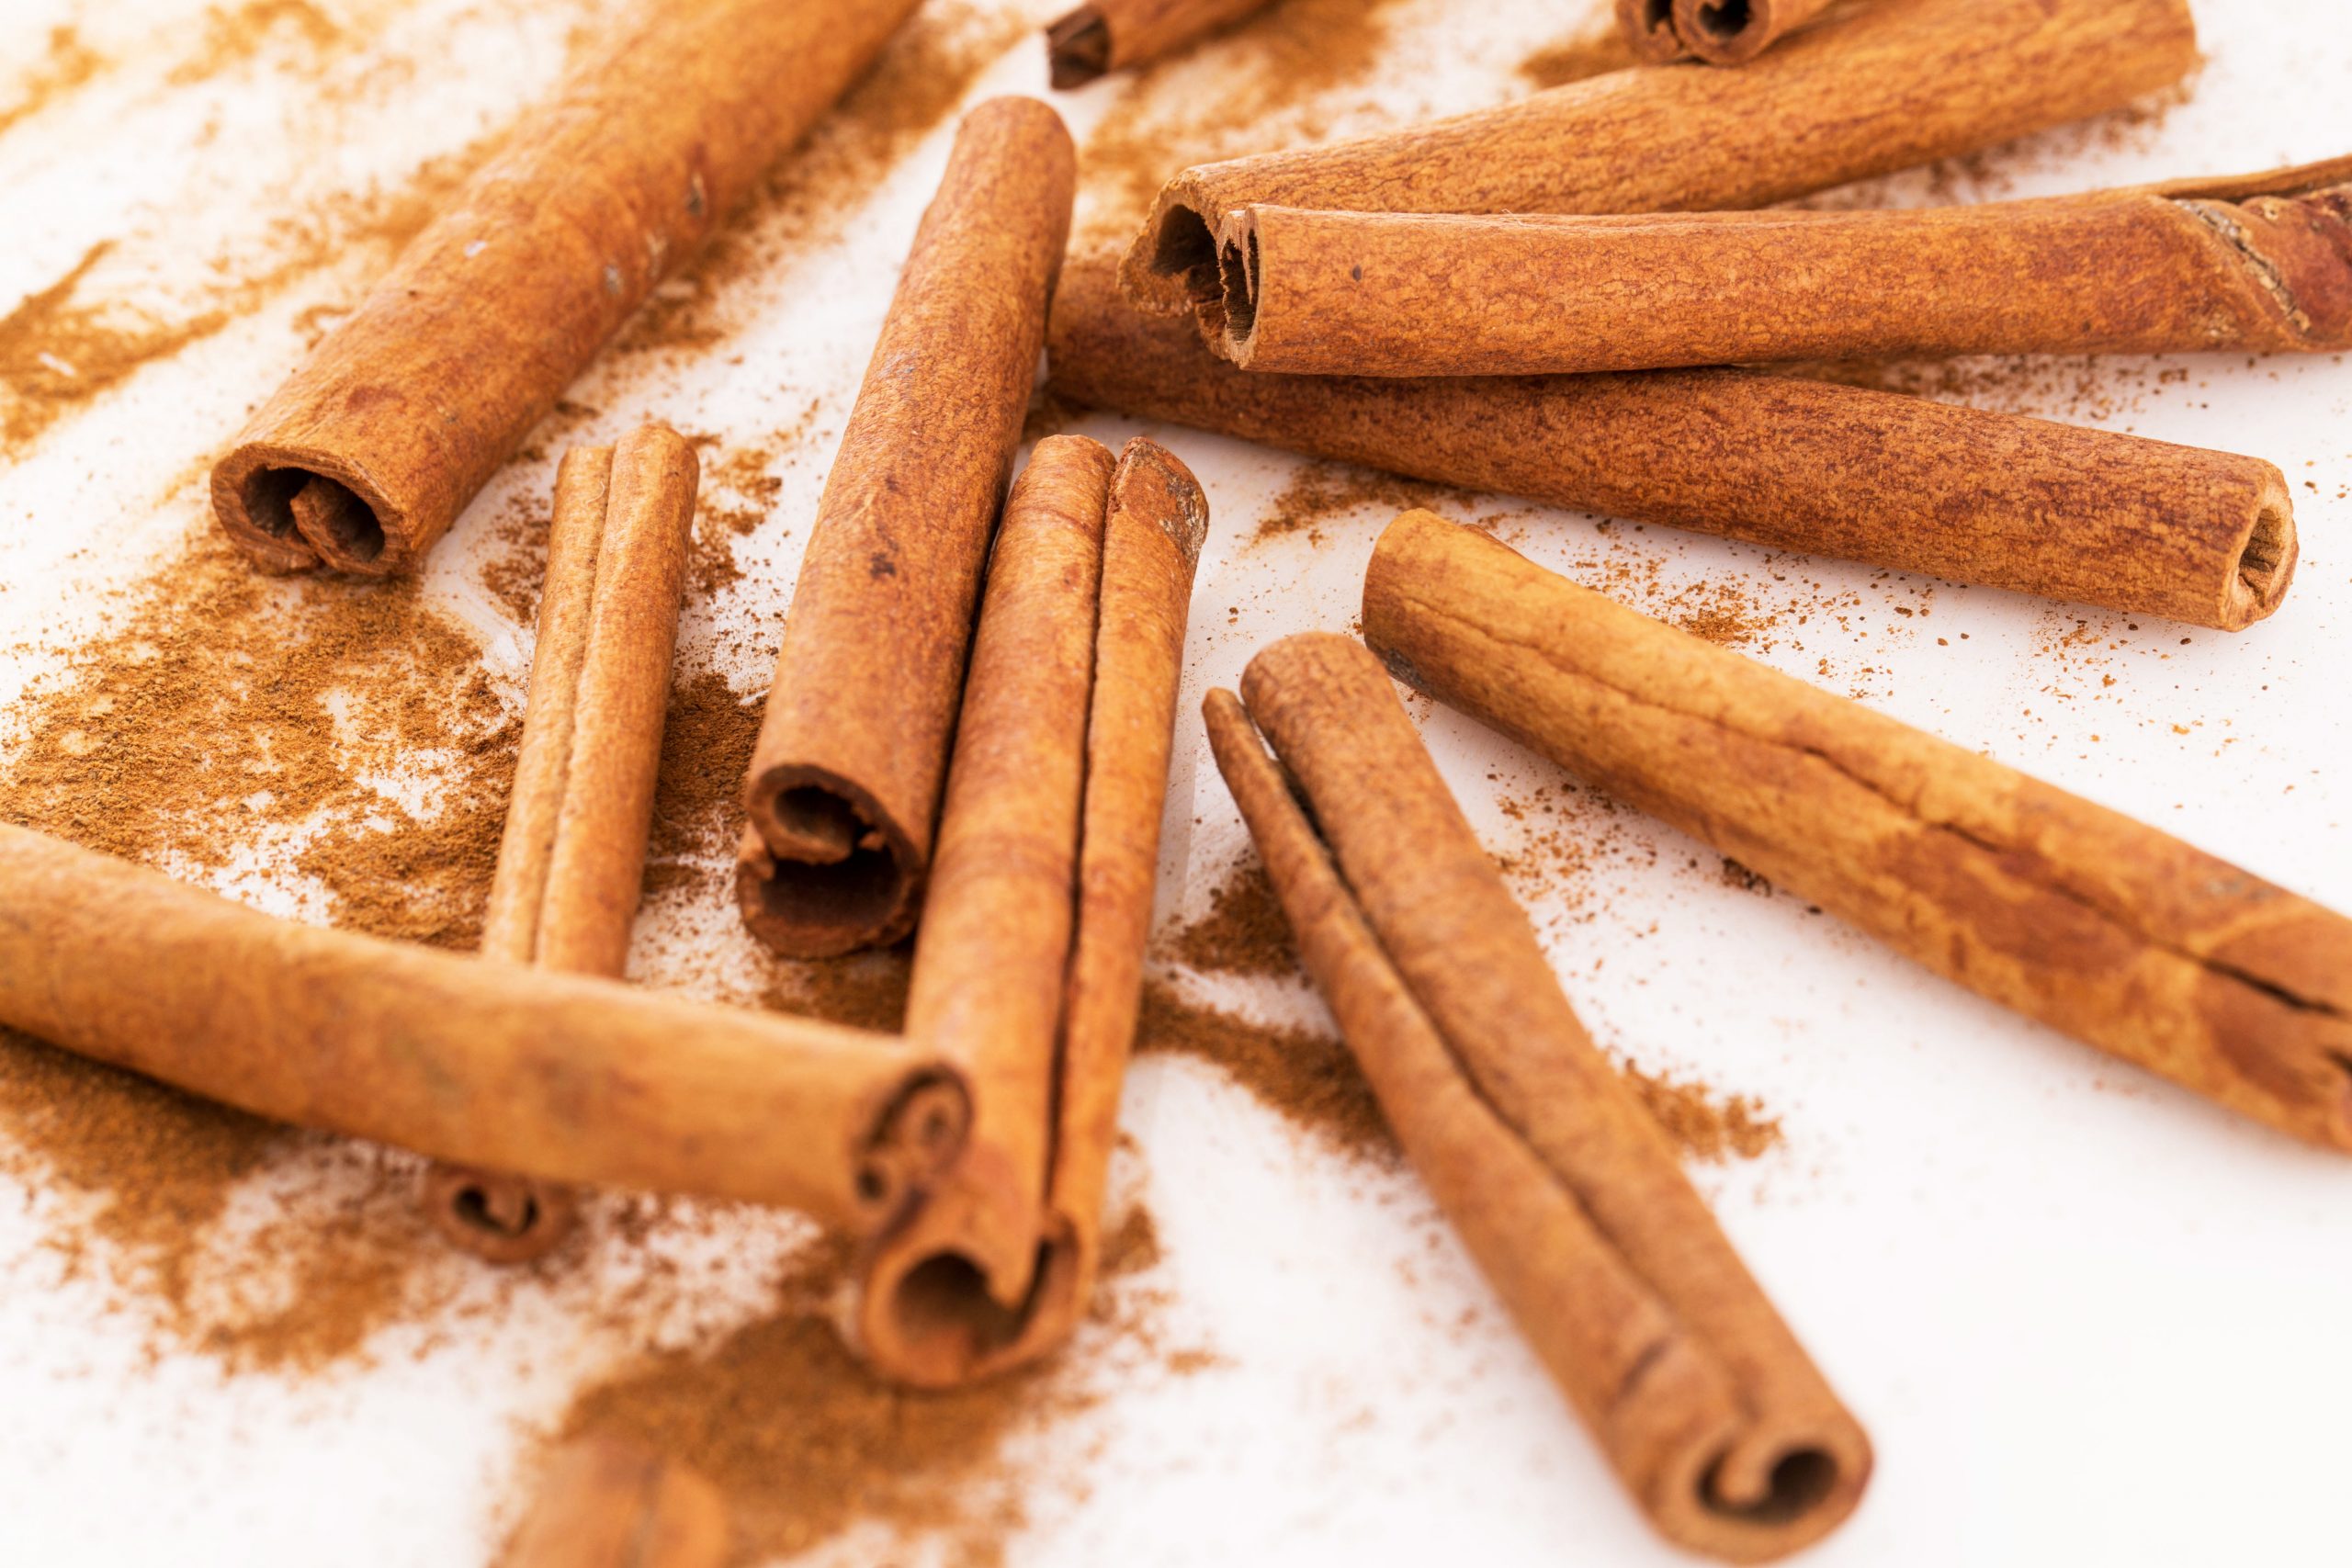 Vietnam's organic cinnamon